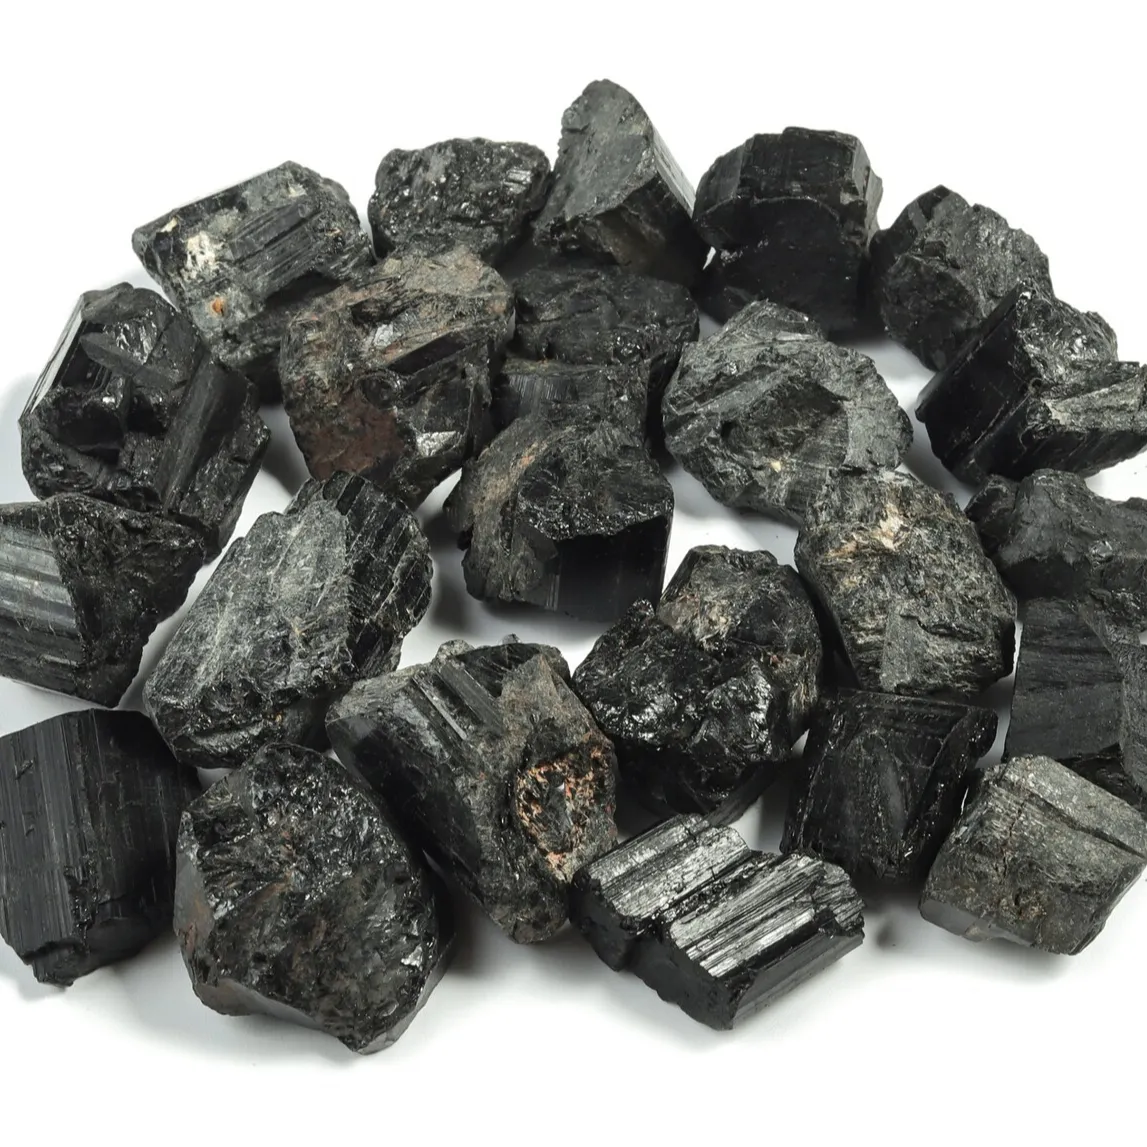 Gemstone Raw Rough Stones Healing Crystals Mineral 2022 Clear Quartz Tourmaline Amazonite Snowflake Latest Wholesale Mix Black